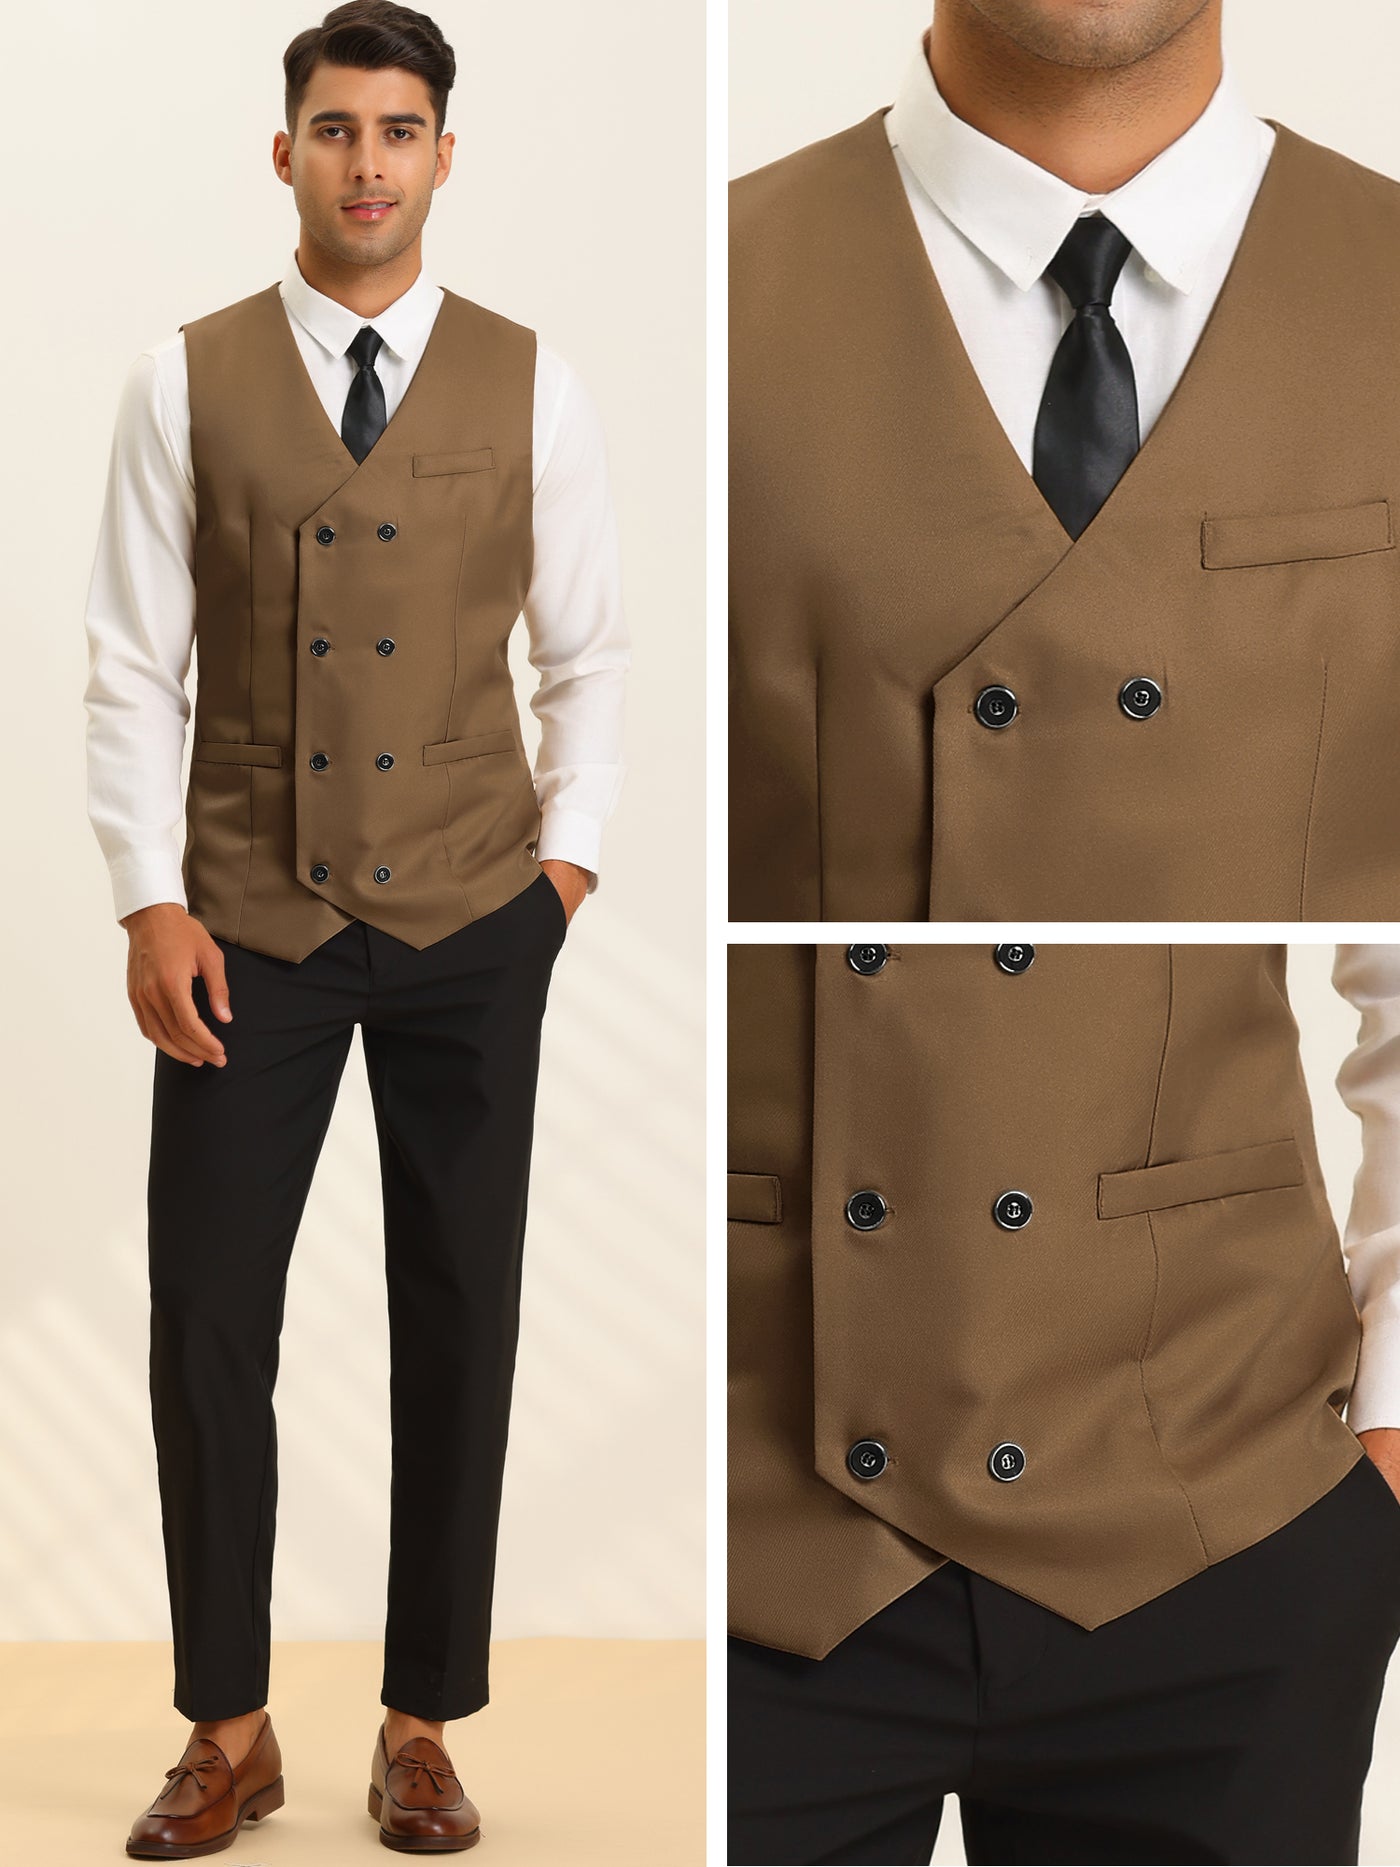 Bublédon Men's Suit Vest Double Breasted Slim Fit Formal Wedding Waistcoat